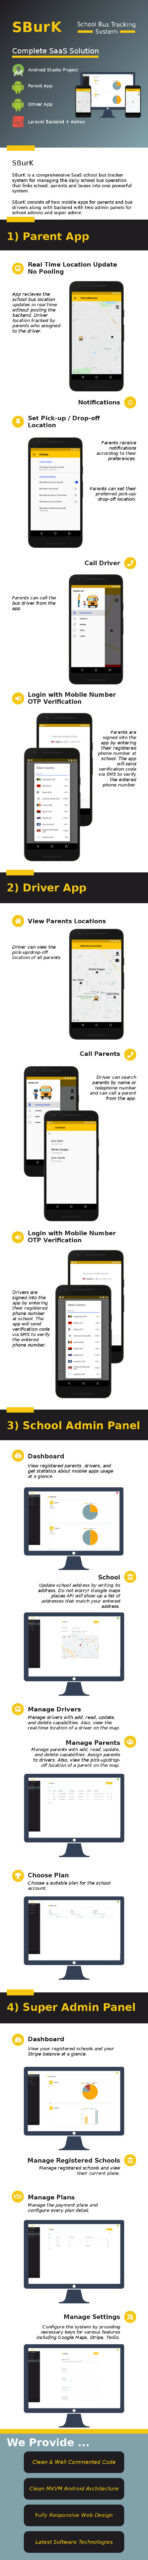 SBurK – School Bus Tracker – İki Android Uygulaması + Arka Uç + Yönetici panelleri – SaaS